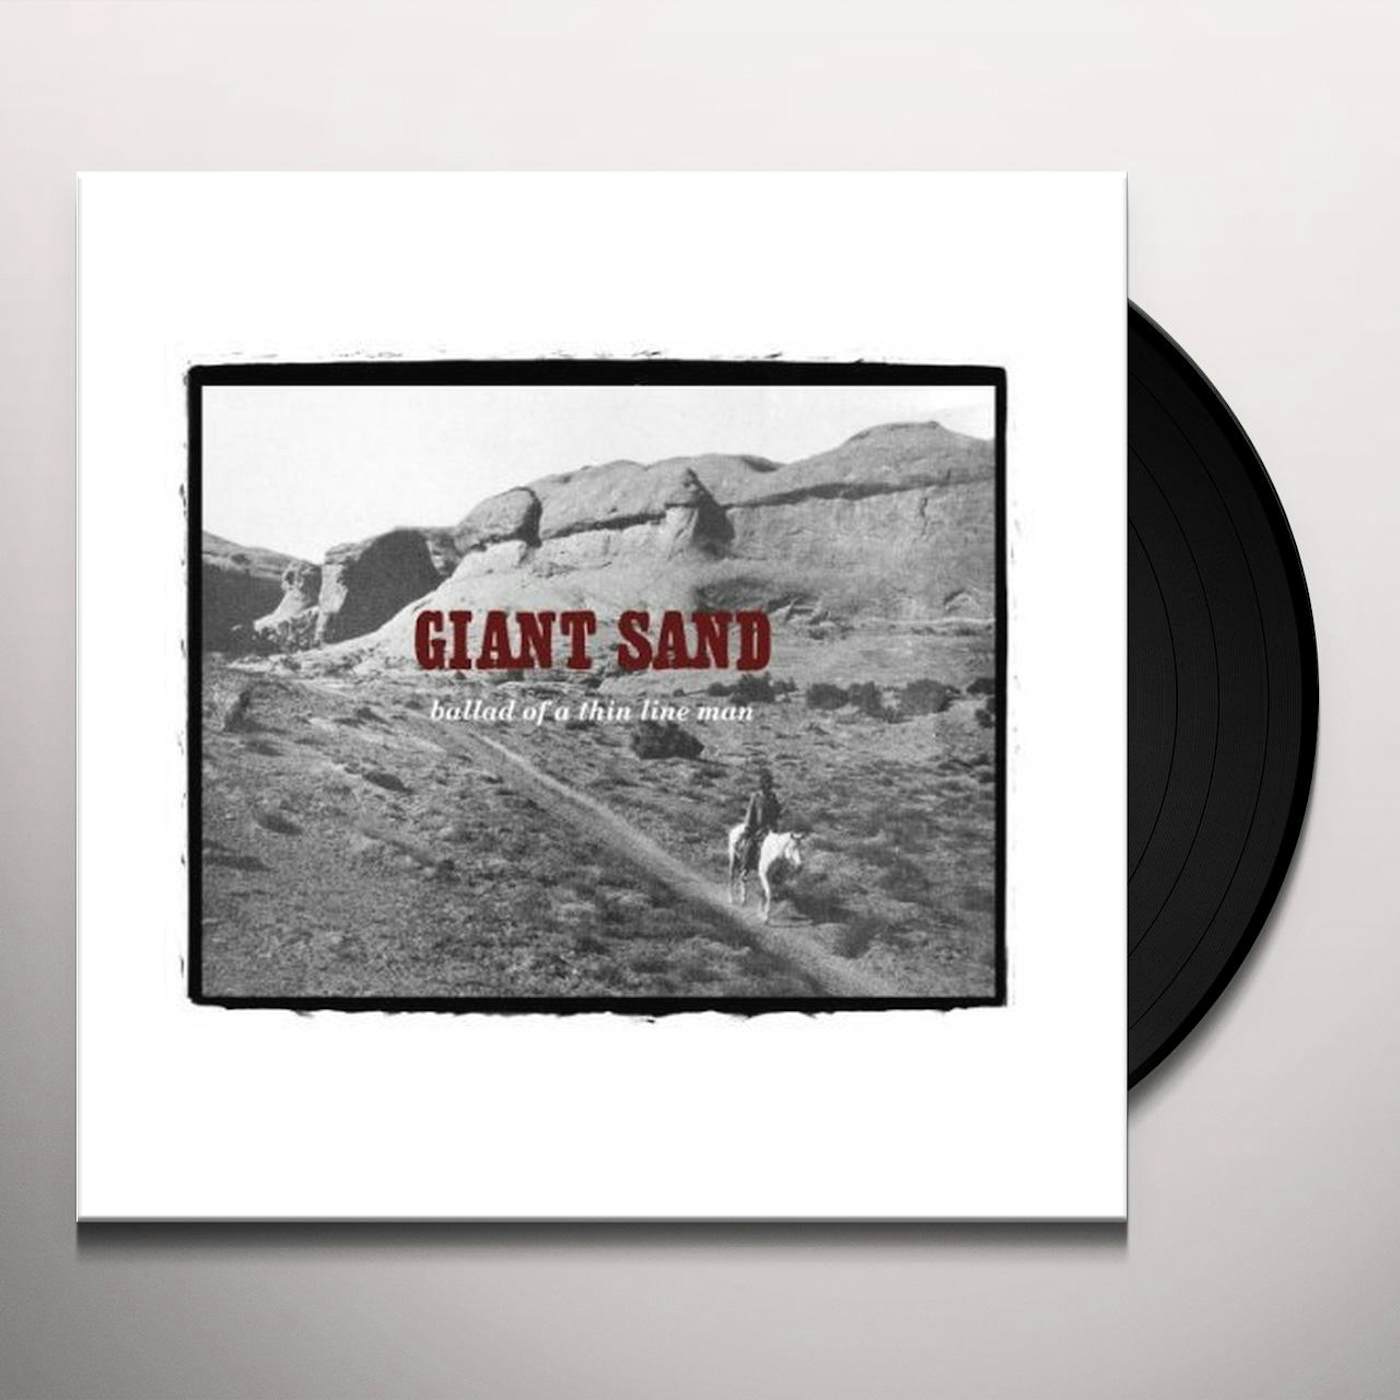 Giant Sand Ballad Of A Thin Line Man Vinyl Record